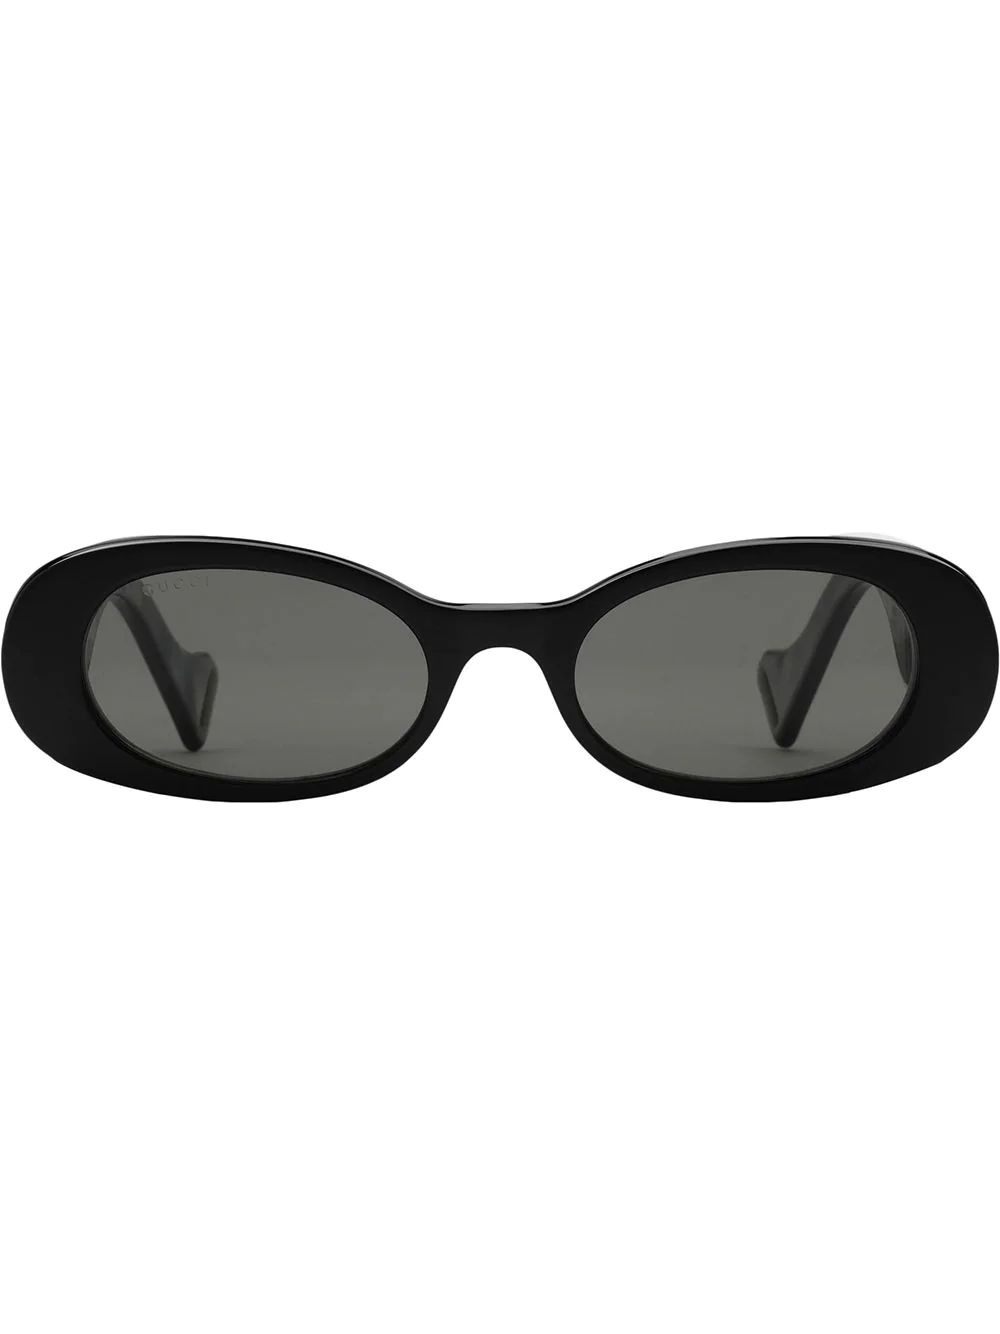 oval frame sunglasses | Farfetch Global